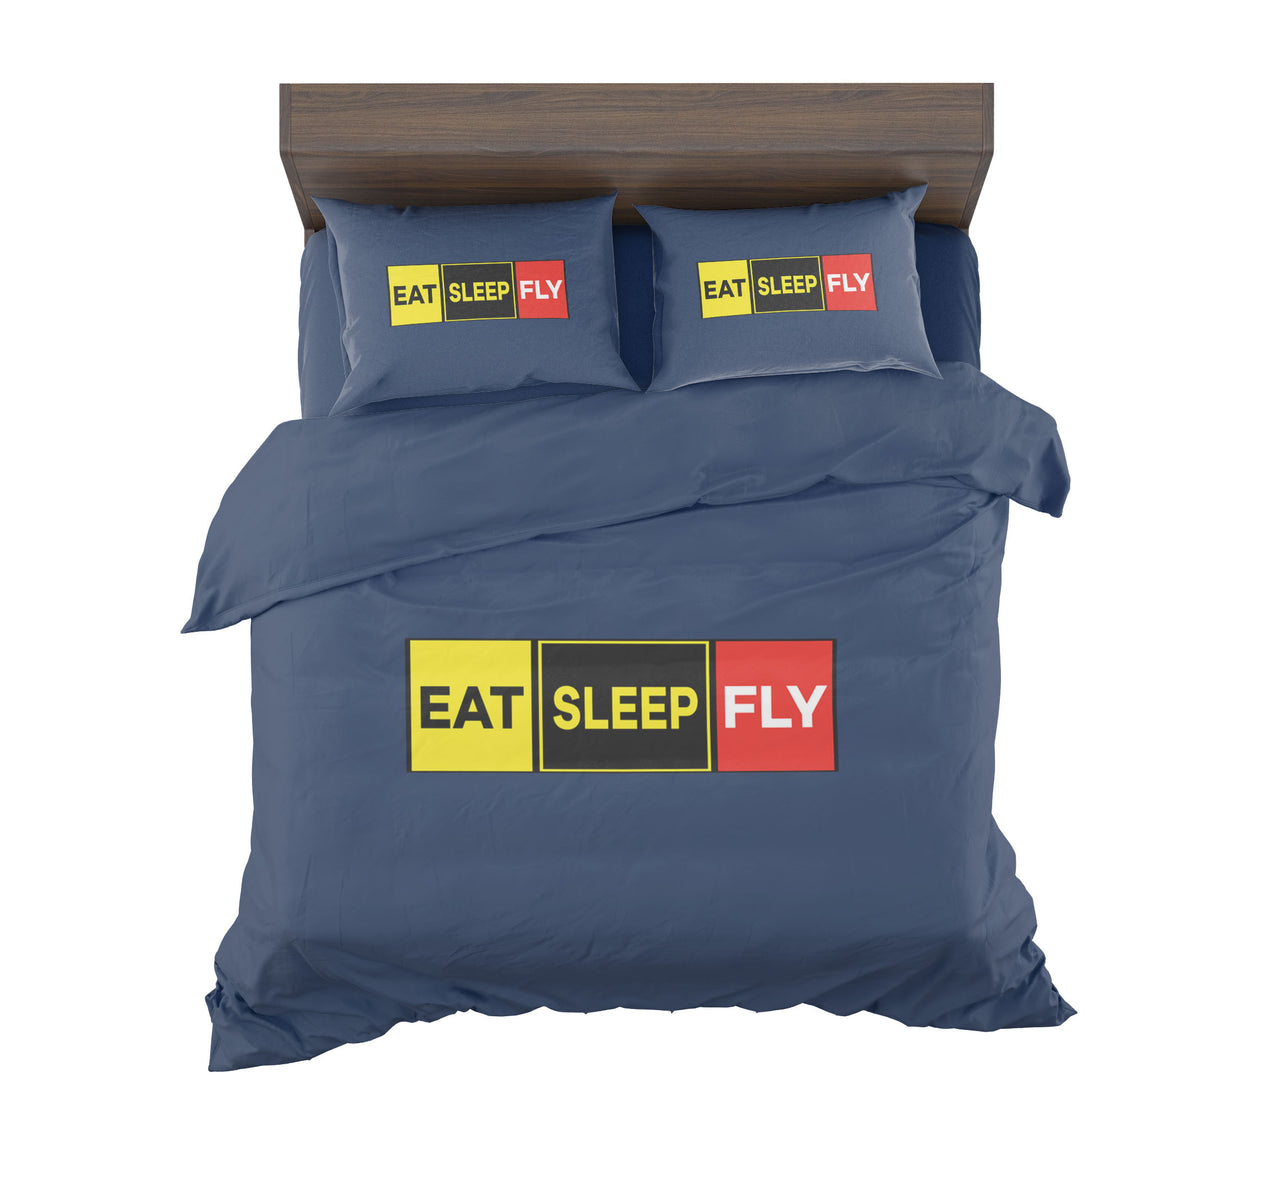 Eat Sleep Fly (Colourful) Designed Bedding Sets